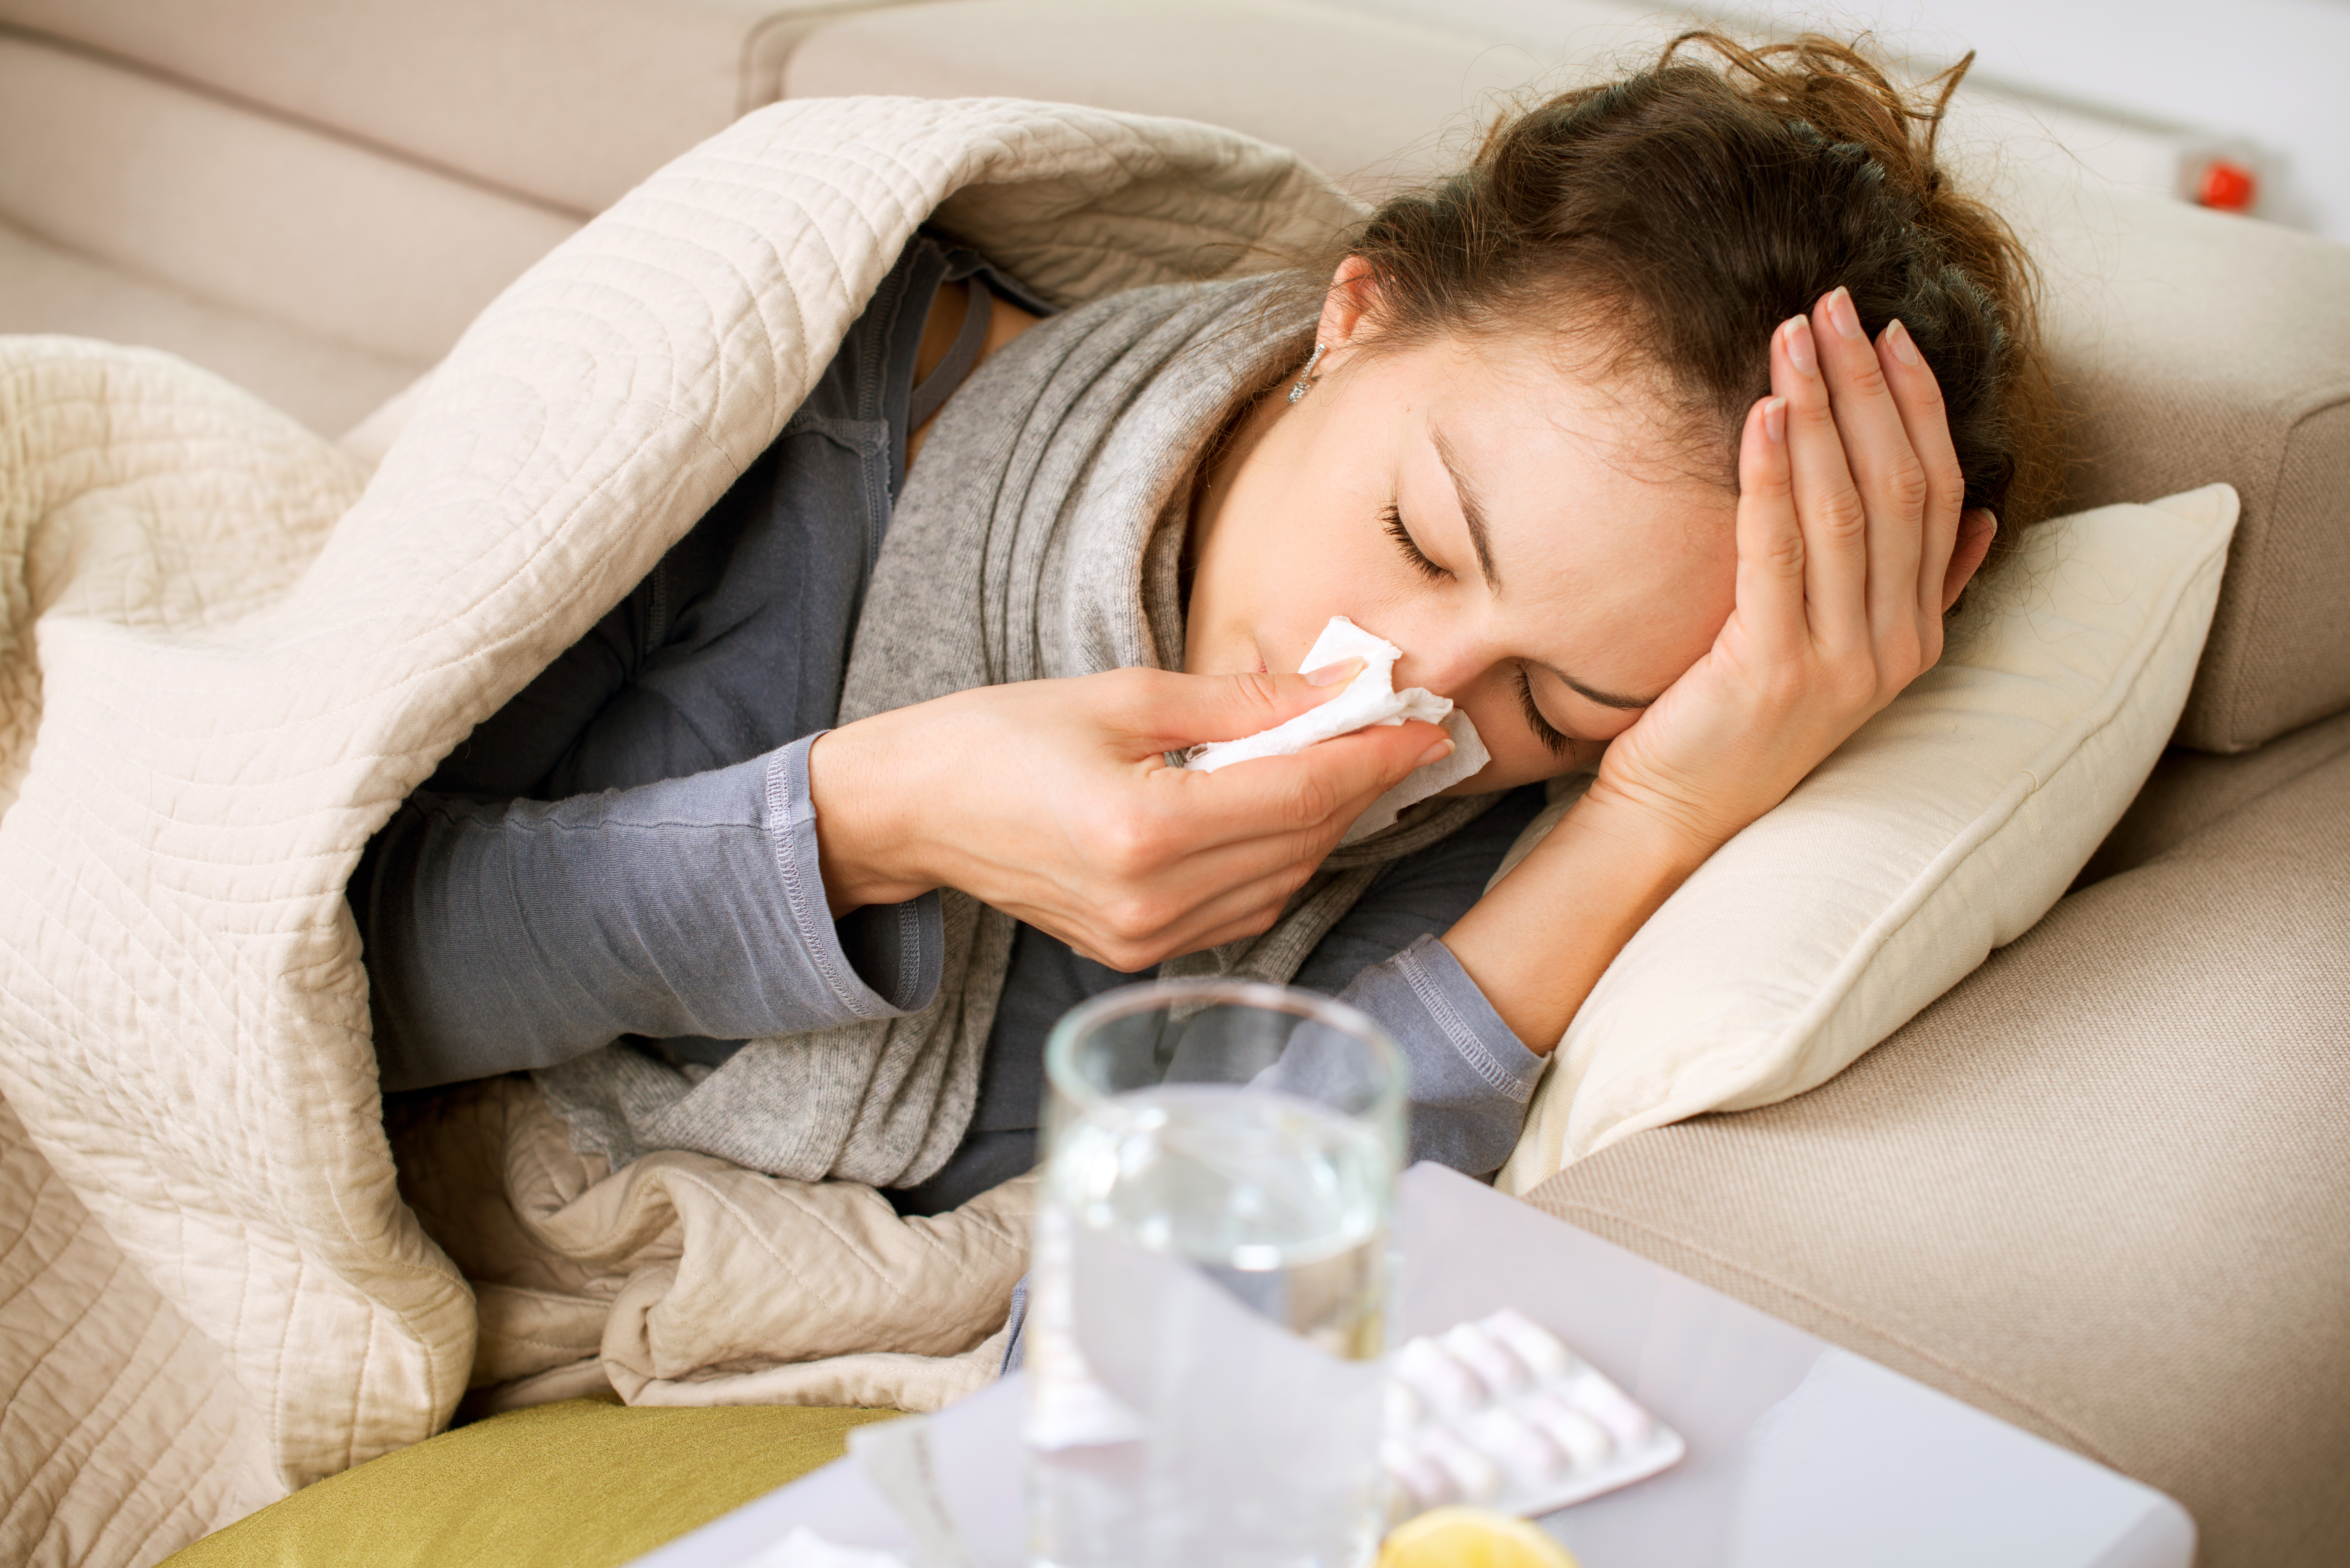 8 Tips for Preventing the Flu